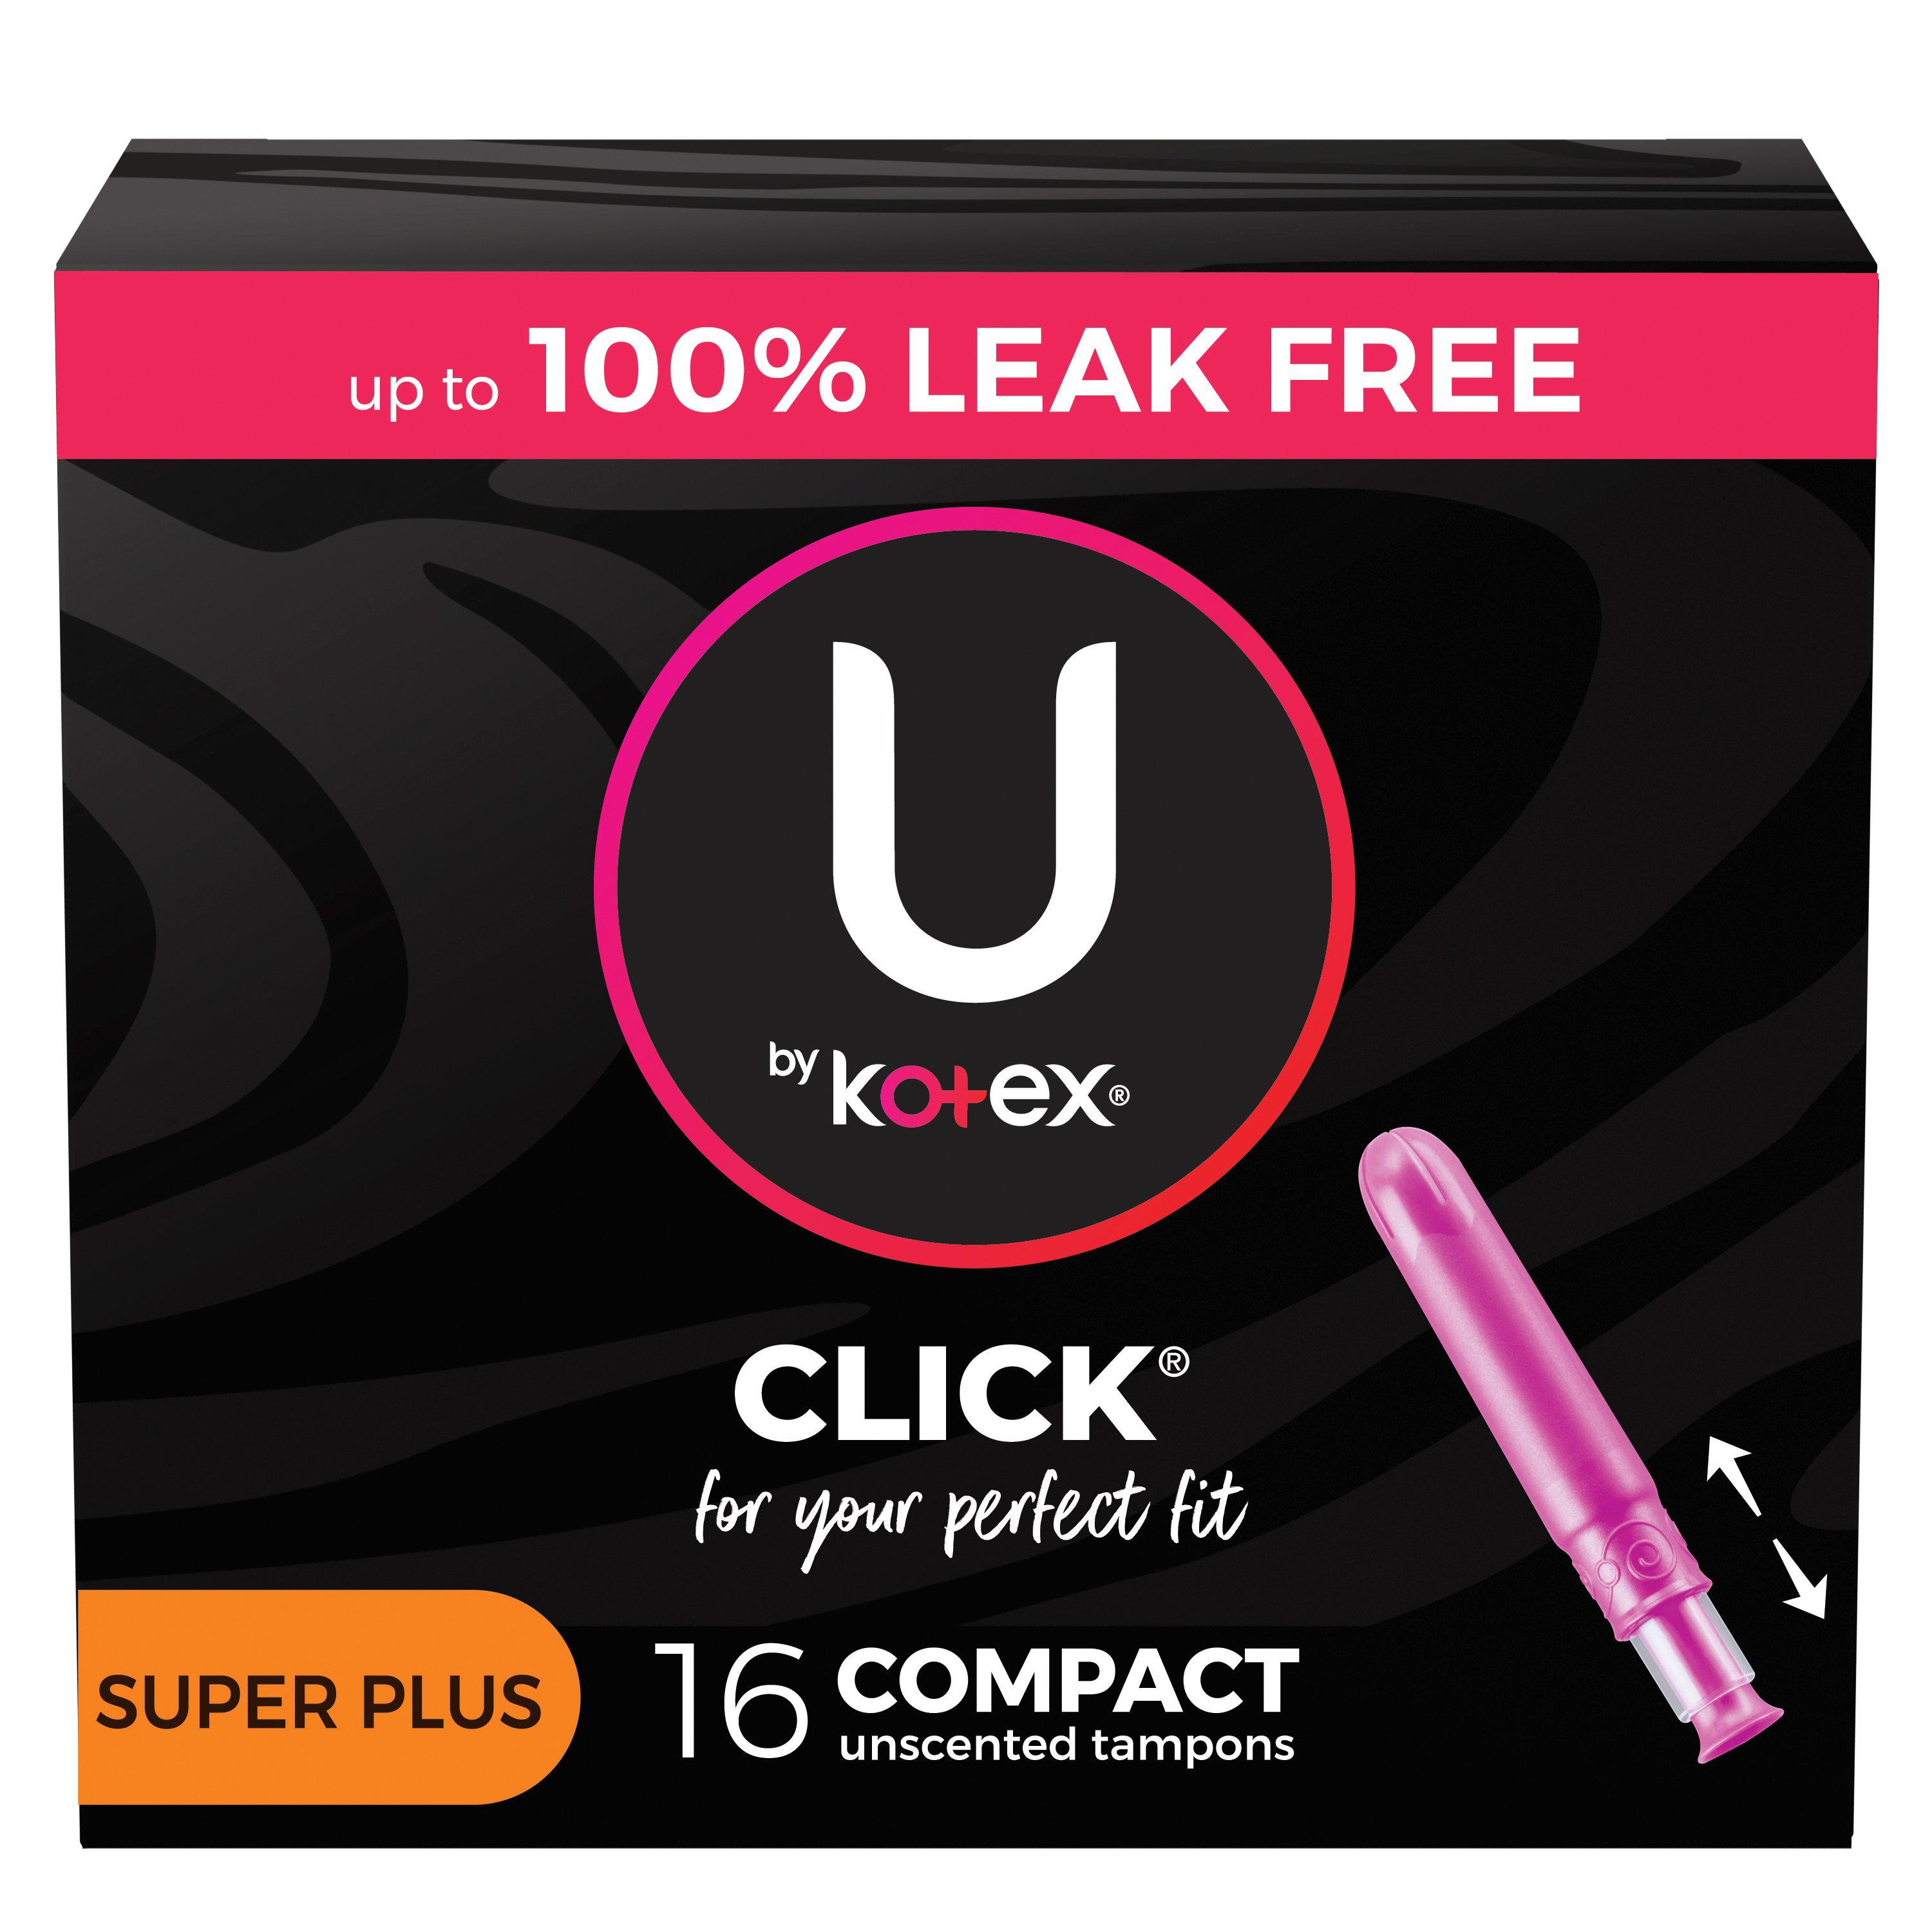 U by Kotex Click Compact Super Plus Tampons - Shop Tampons at H-E-B